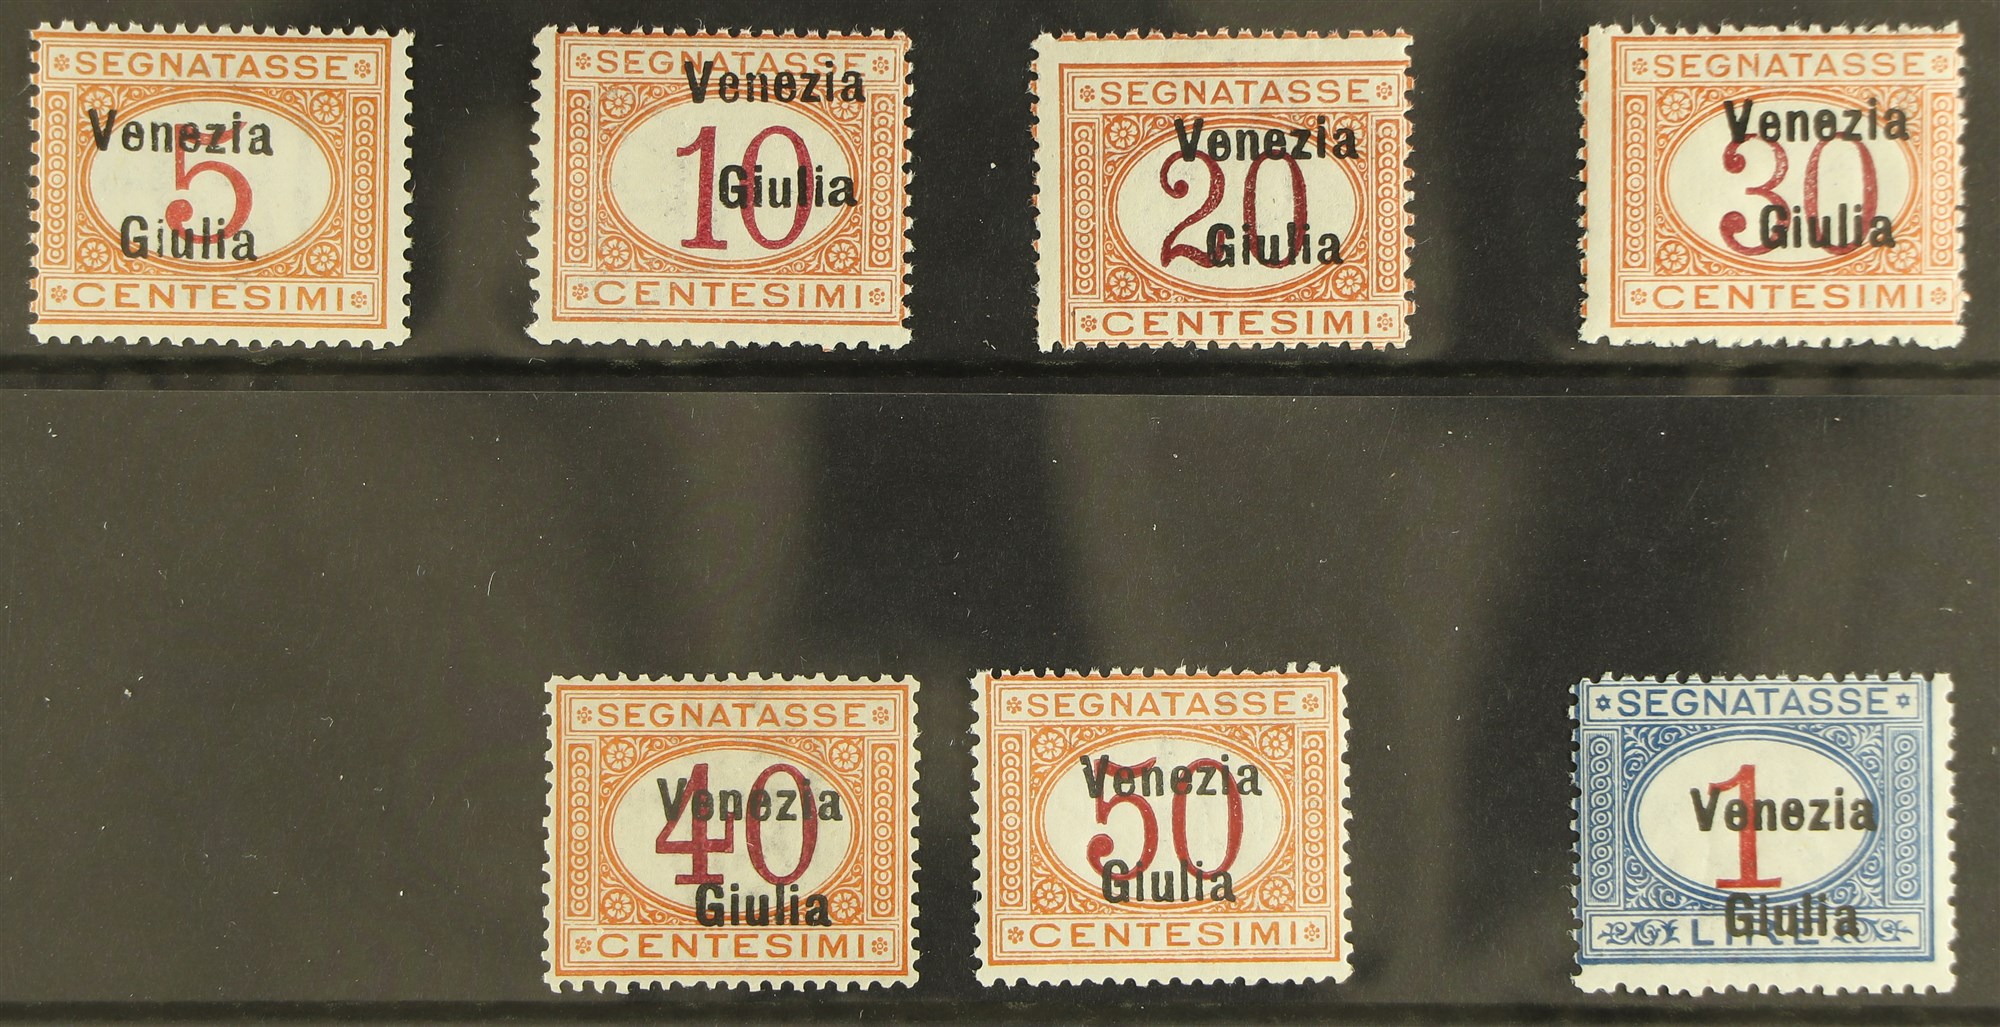 ITALY VENEZIA GIULIA Postage Due 1918 complete set, Sassone S4, never hinged mint. Cat. €2500 (7